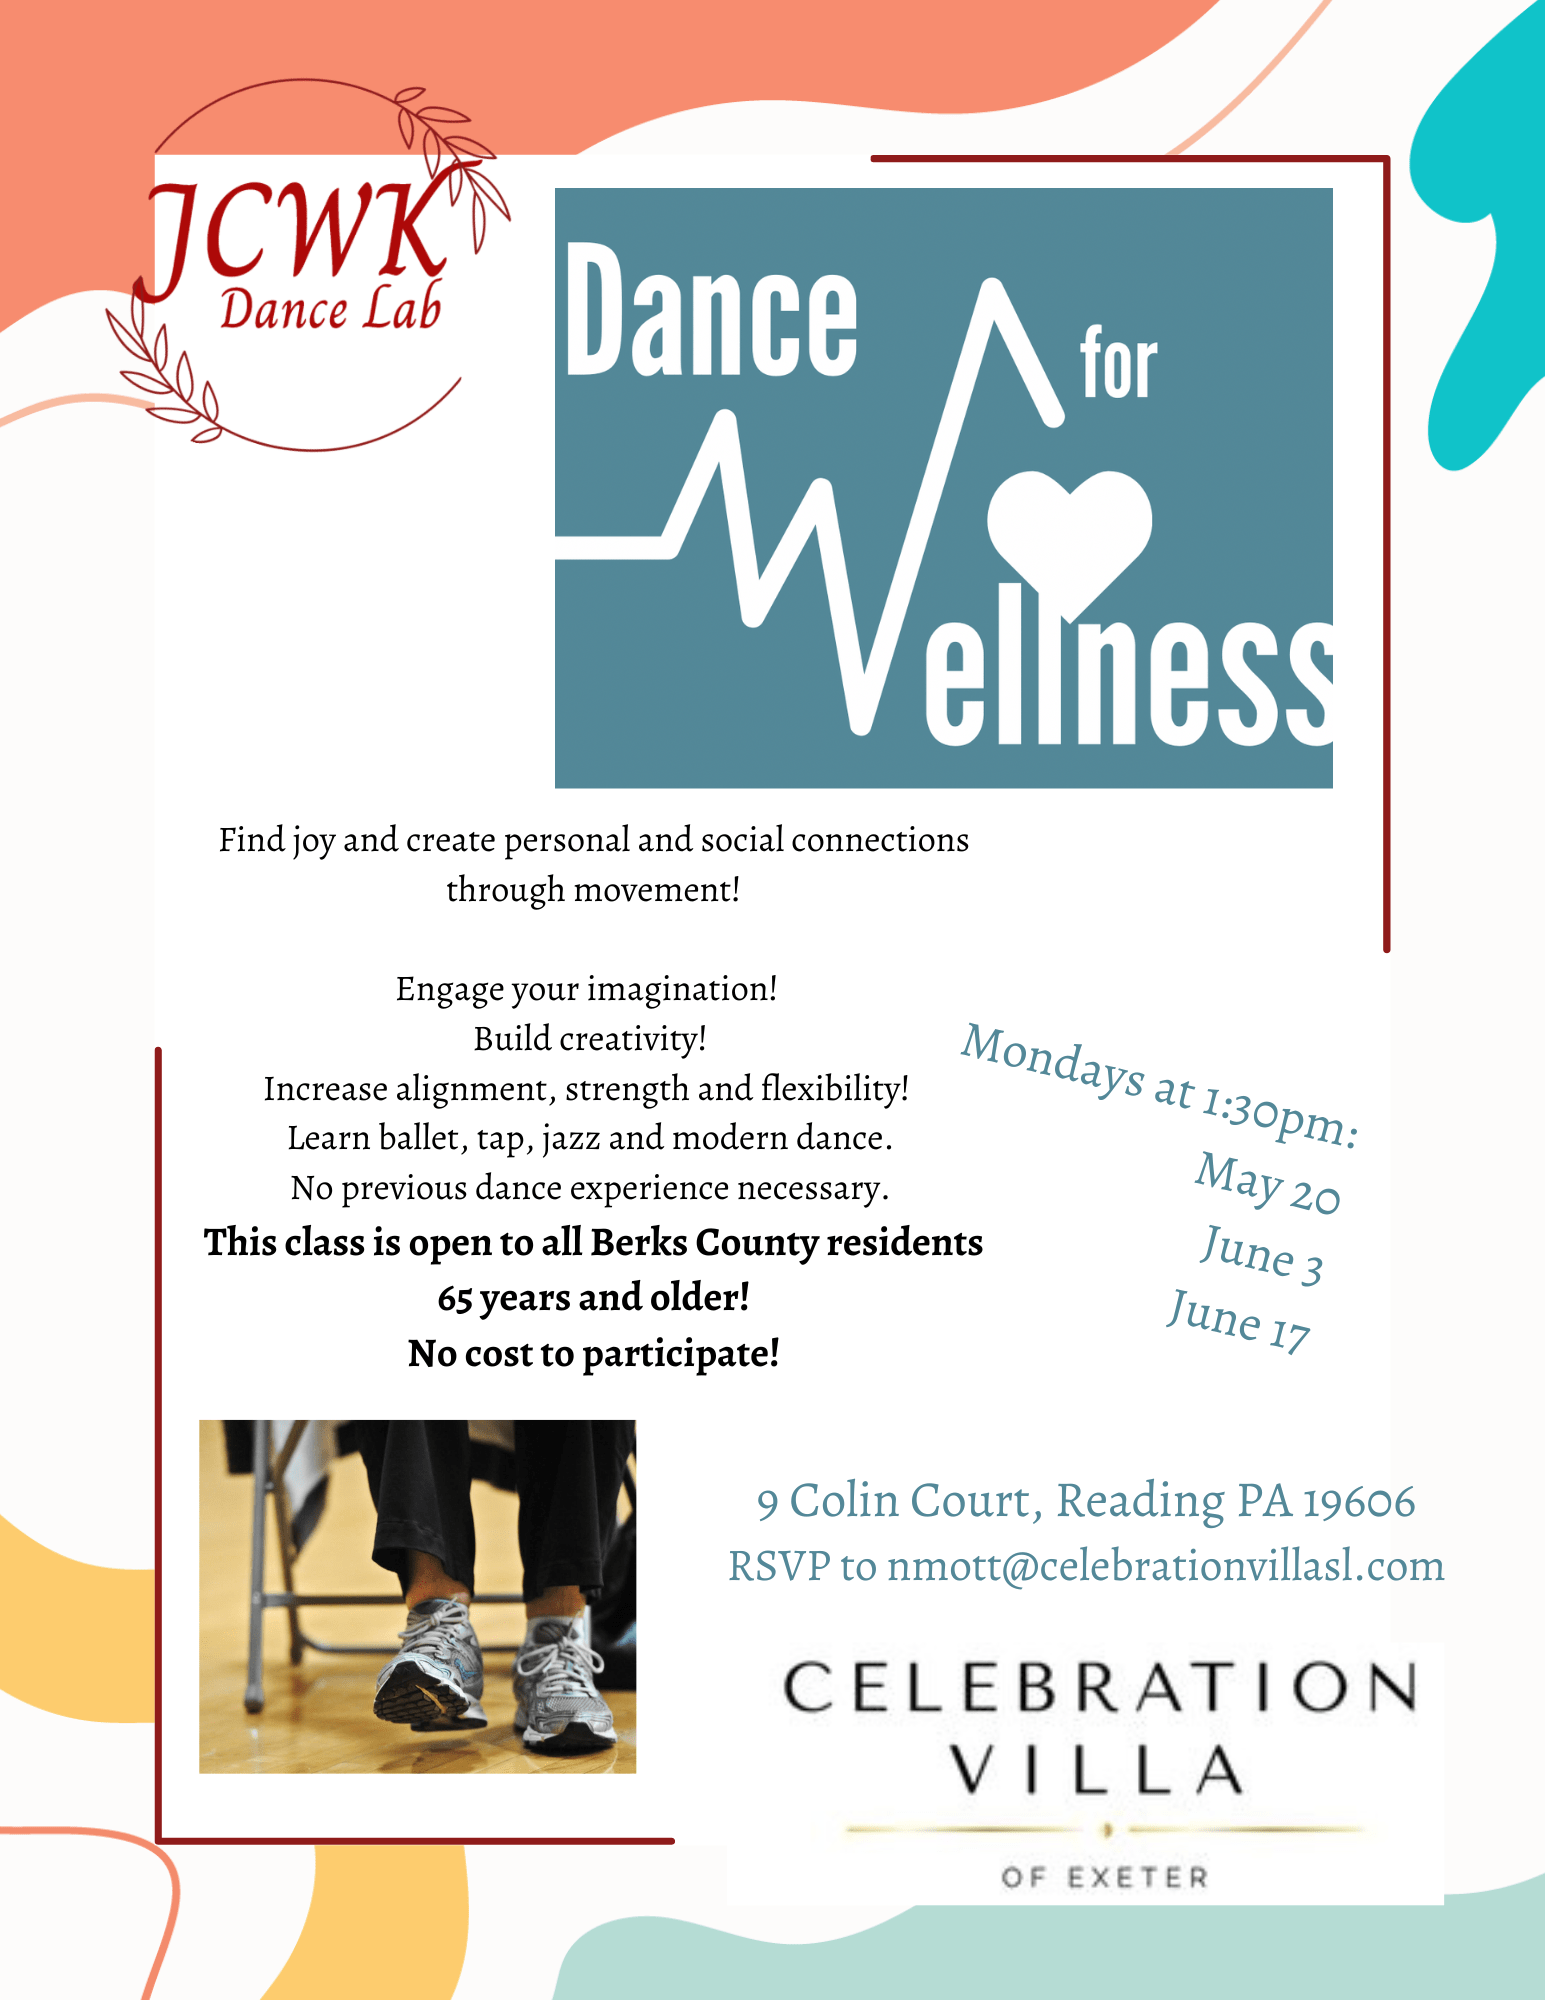 JCWK Dance Lab Dance for Wellness CV1